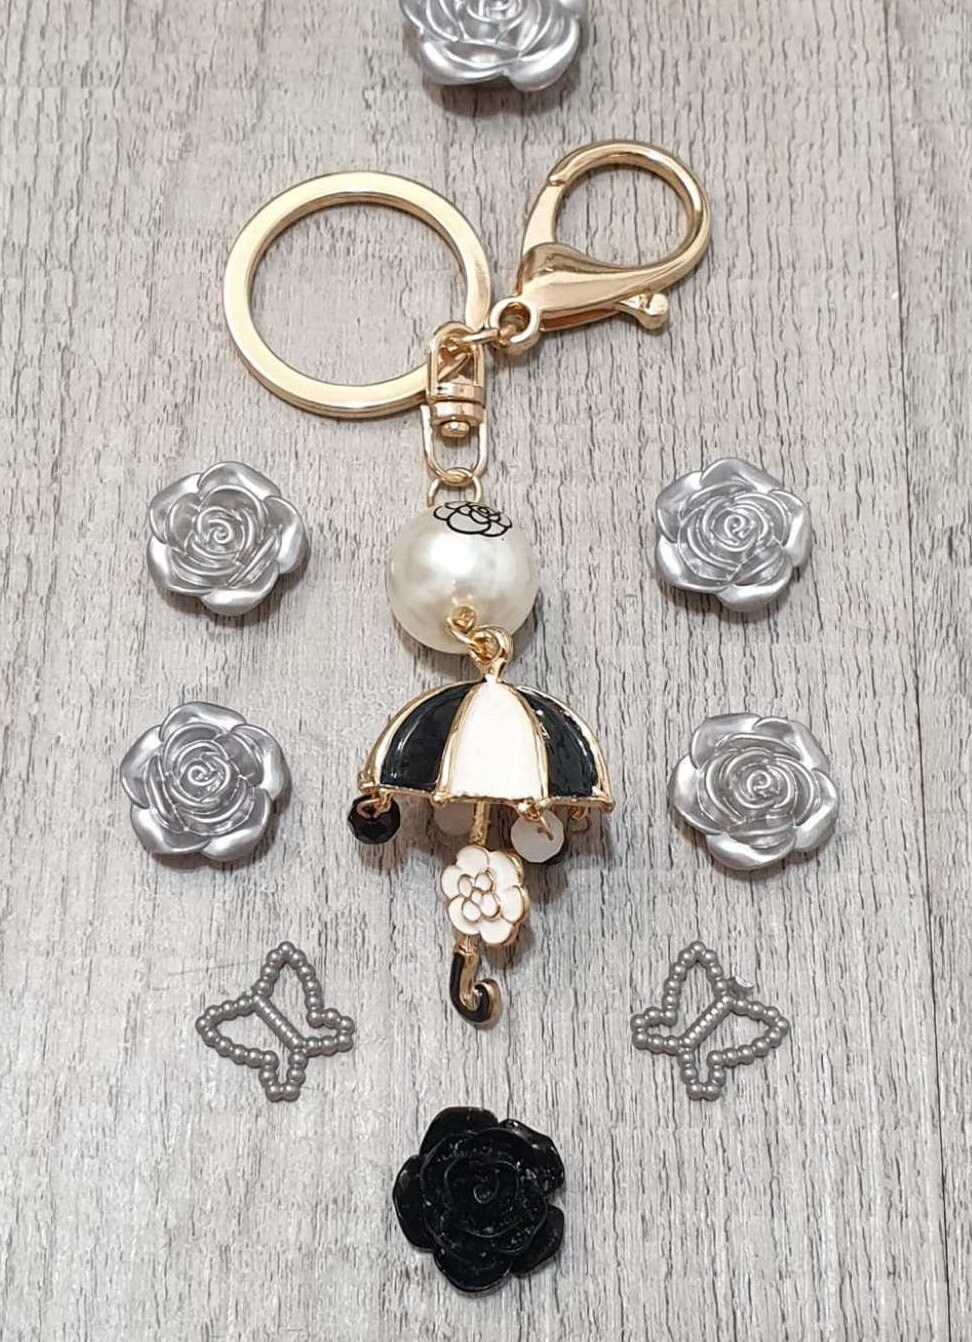 ExquisiteFlowersUSA Camellia Flower Handbag Charm/Umbrella Designer Key Ring/ Black and White Handbag Charm /Women Accessory /Birthday Gift/Gift for Her